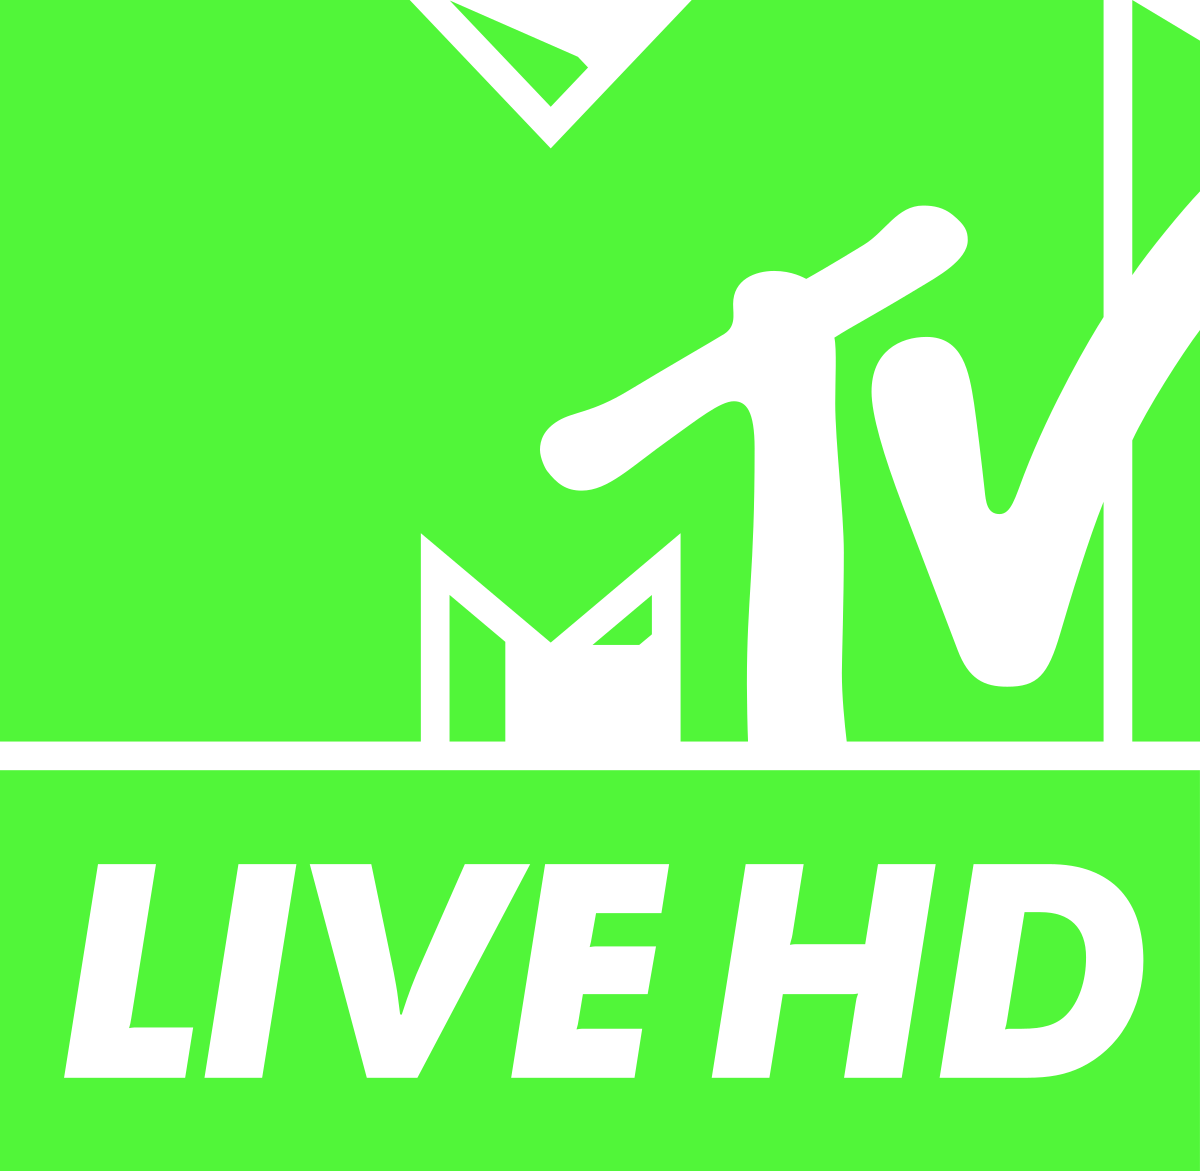 Nick HD Logo - MTV Live HD